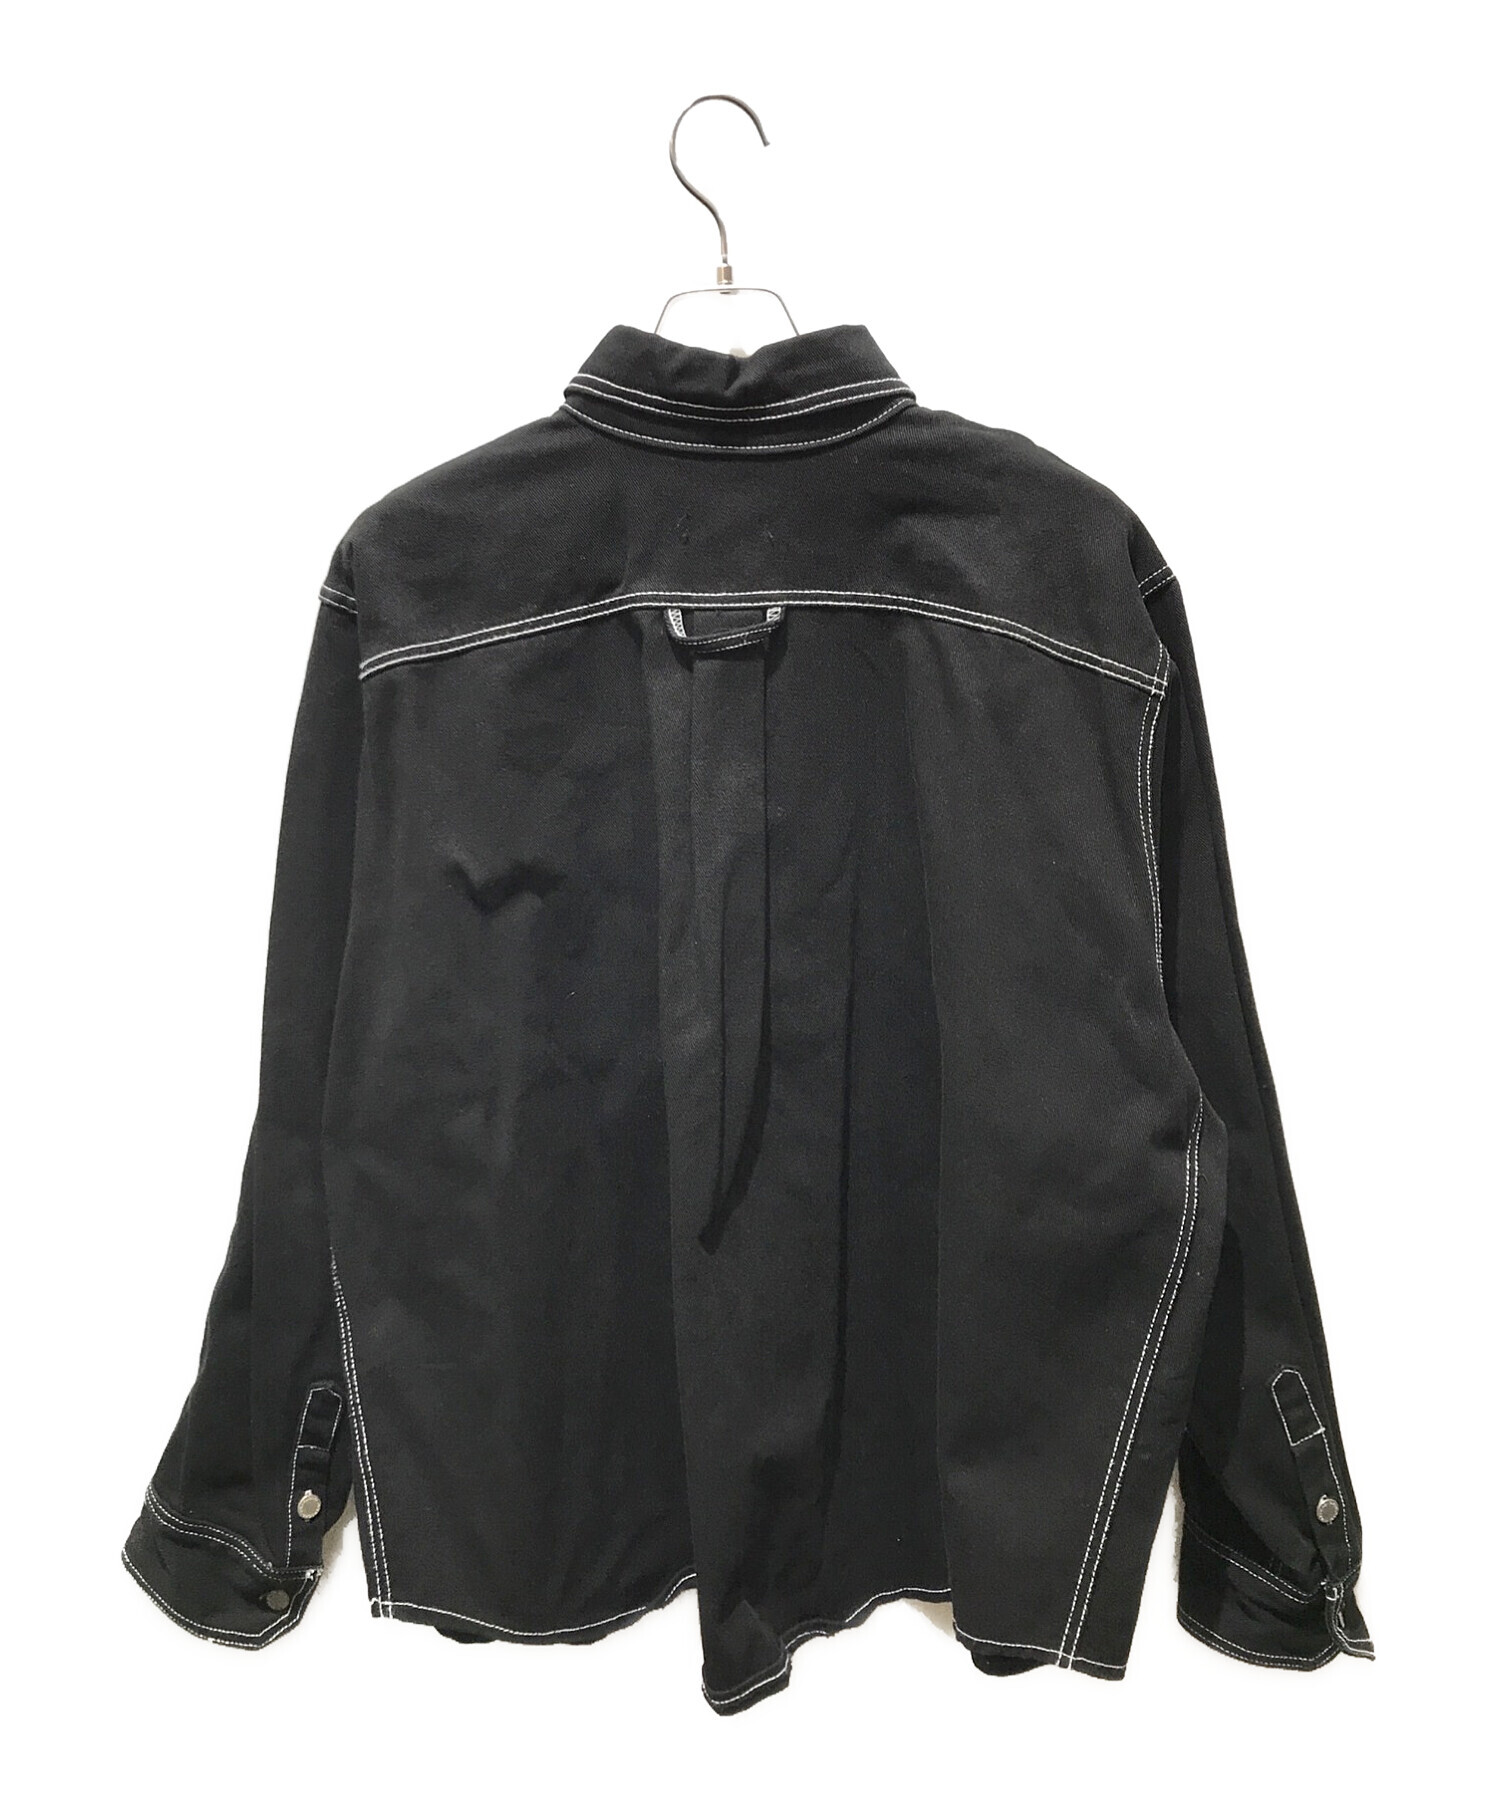 OVER LOAD (オーバーロード) overfit denim jacket ブラック サイズ:記載無しの為実寸参照